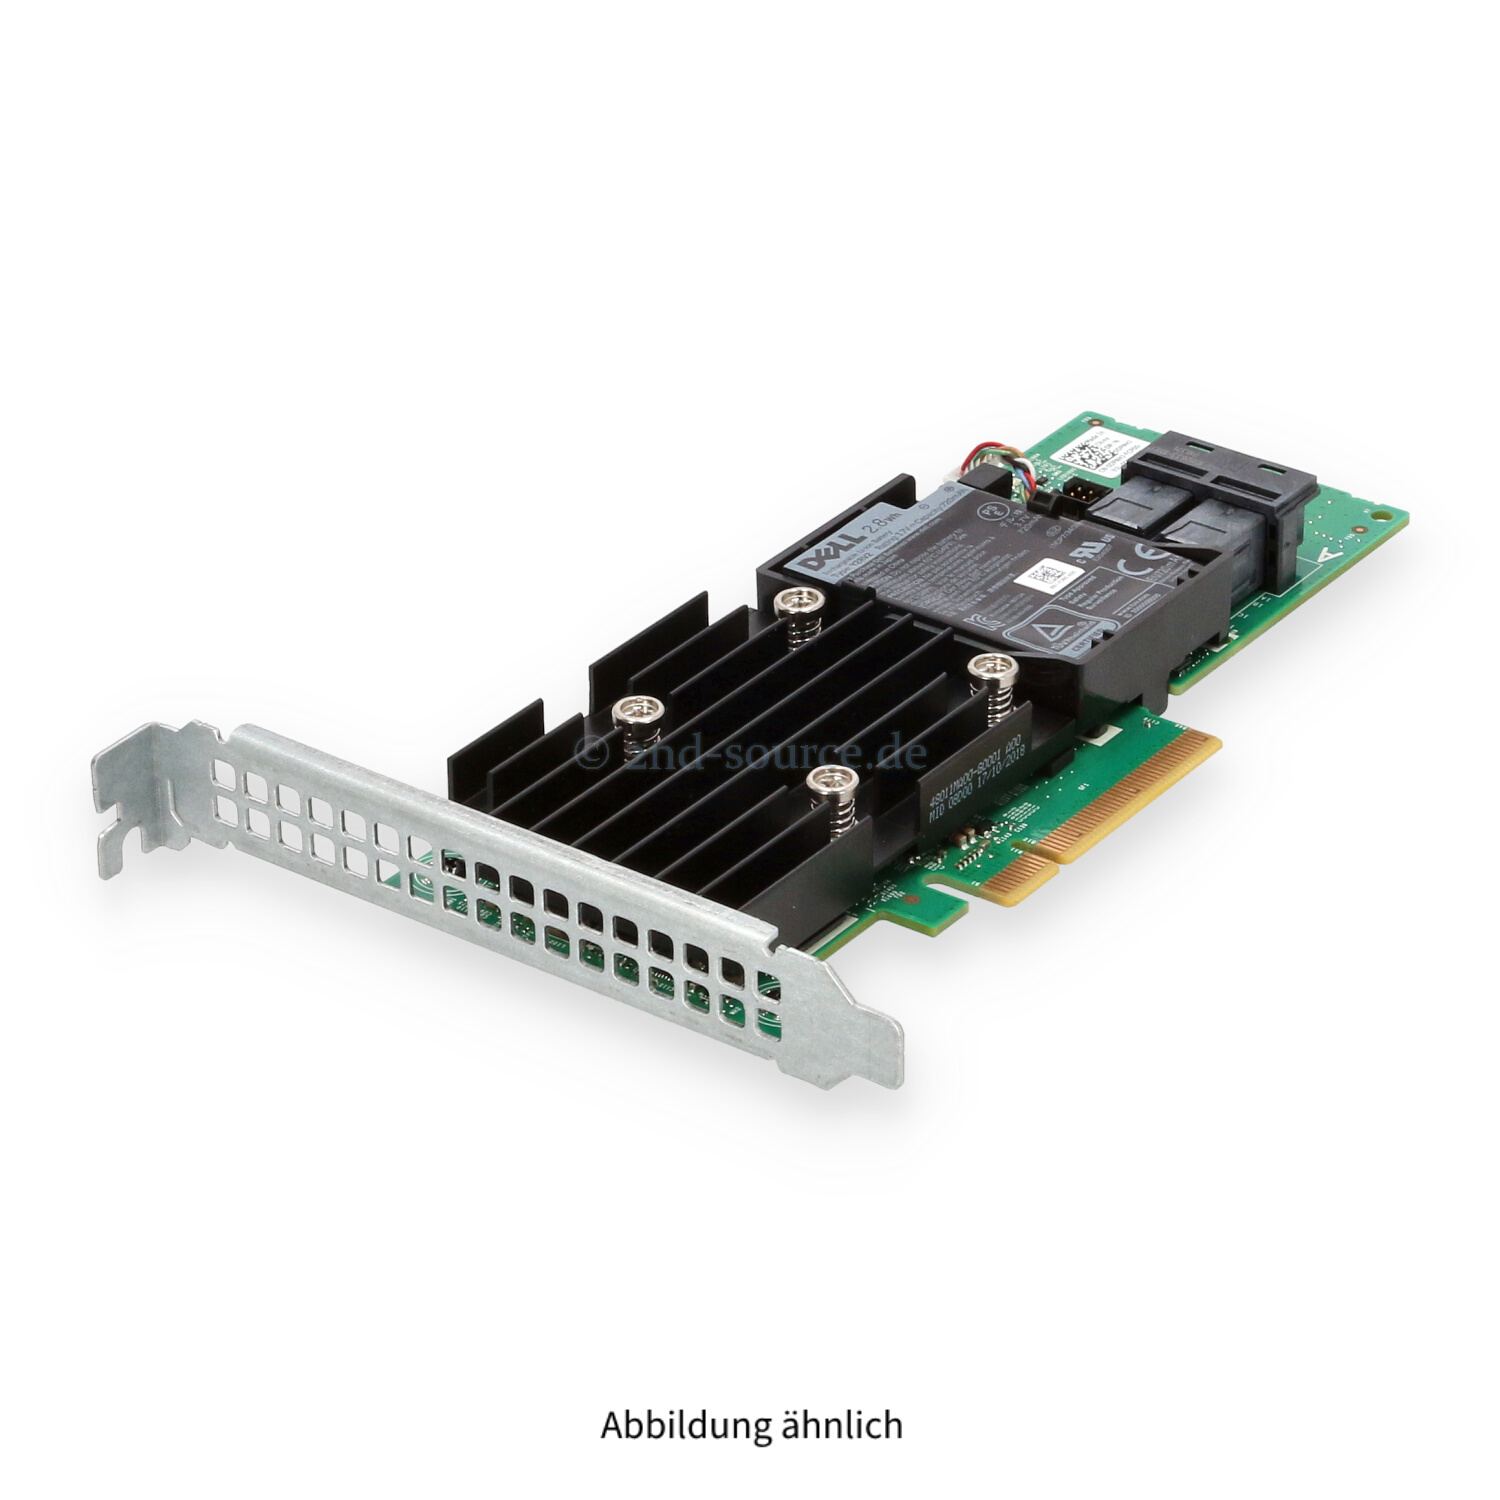 Dell PERC H740p 12G PCIe SAS RAID Controller High Profile DPNHJ 0DPNHJ 405-AAMX